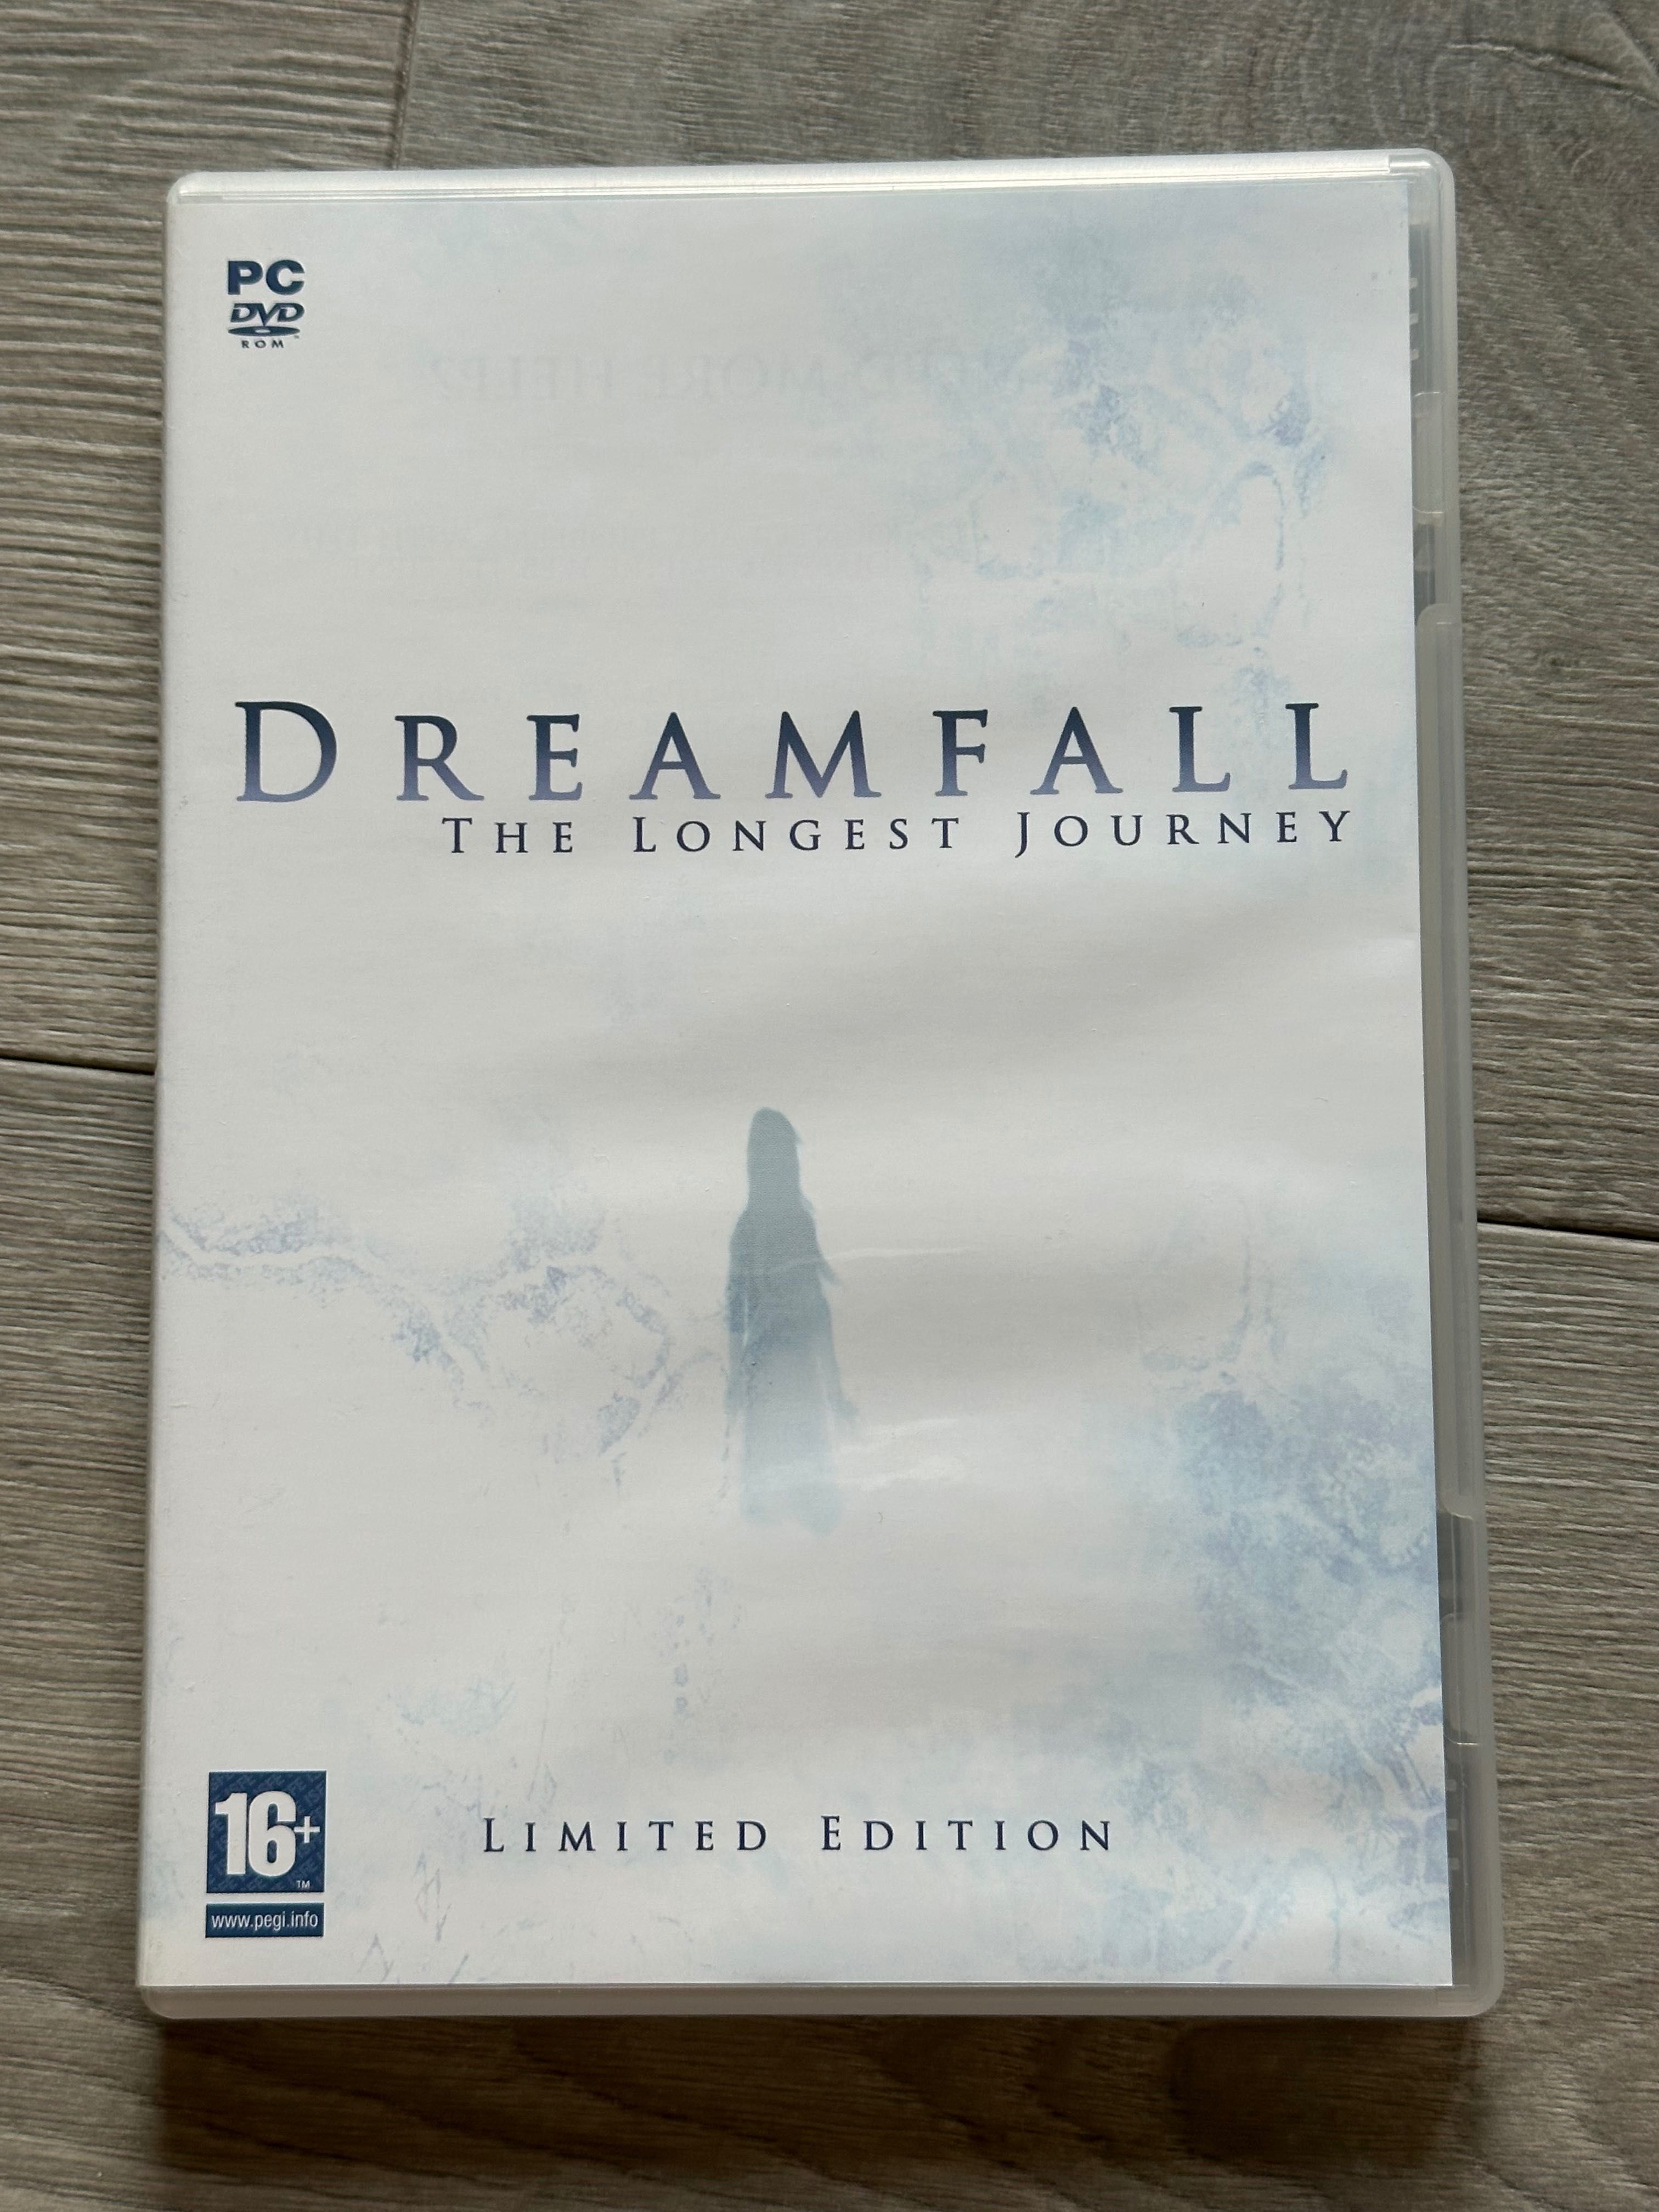 Dreamfall: The Longest Journey (Limited Edition) / PC / EN